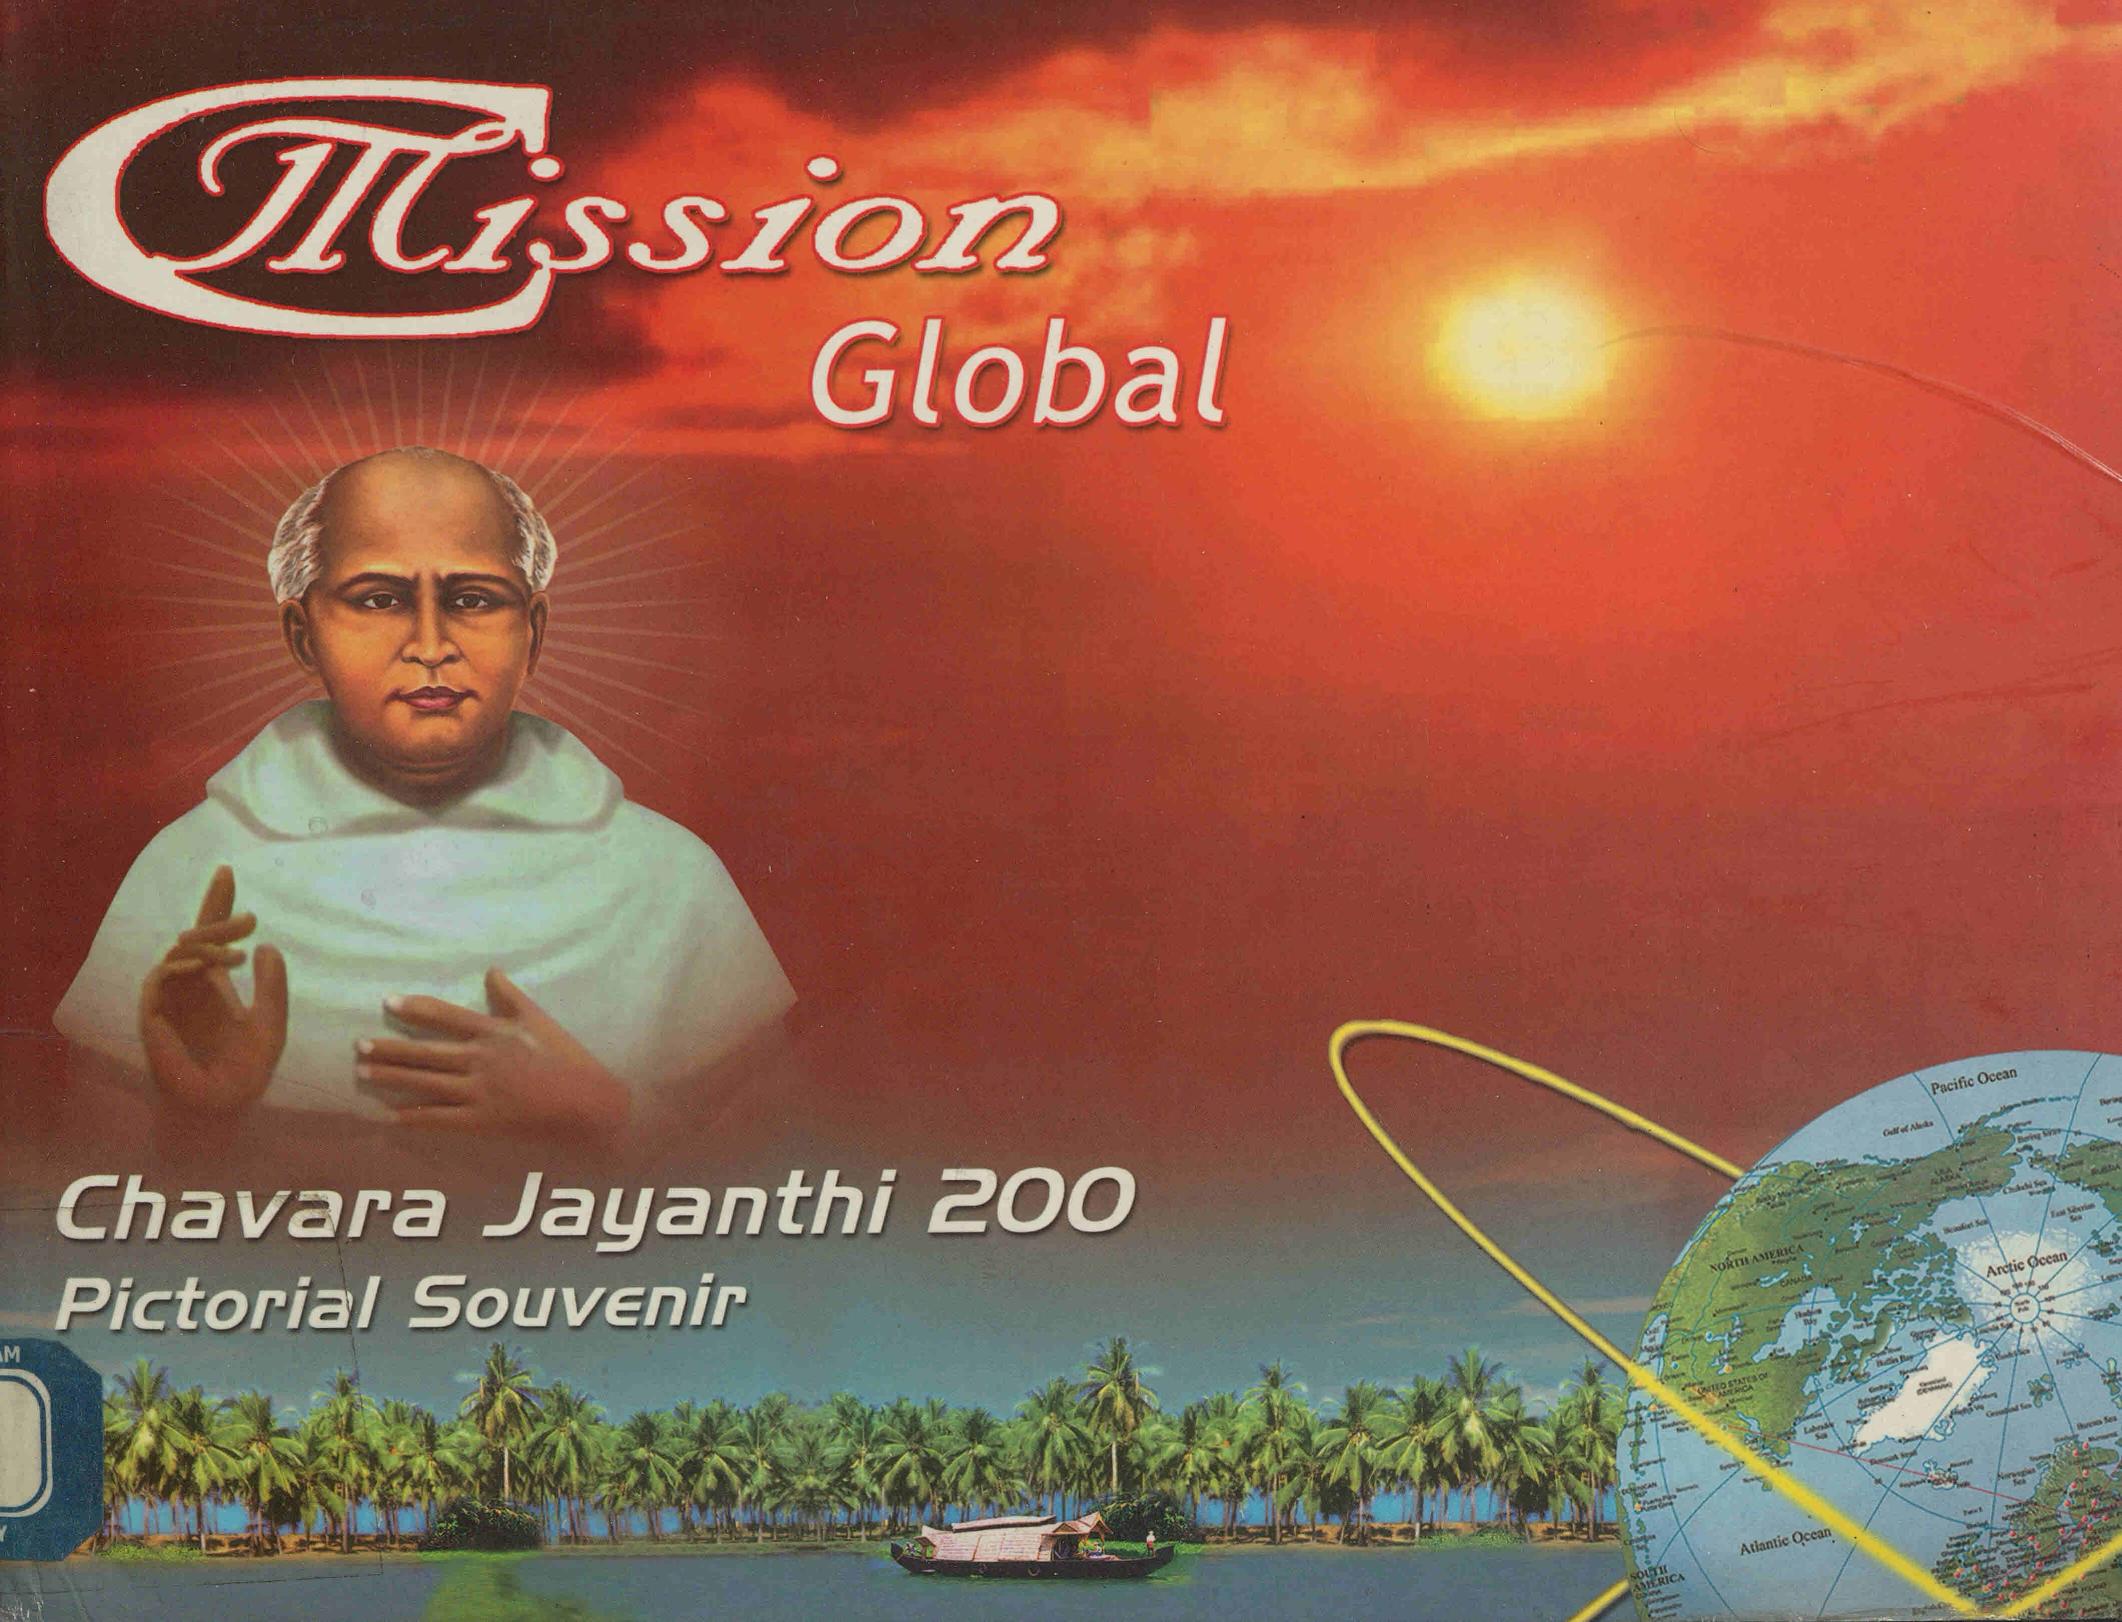 2005 - C - Mission Global - Chavara Jayanthi 200 Pictorial Souvenir